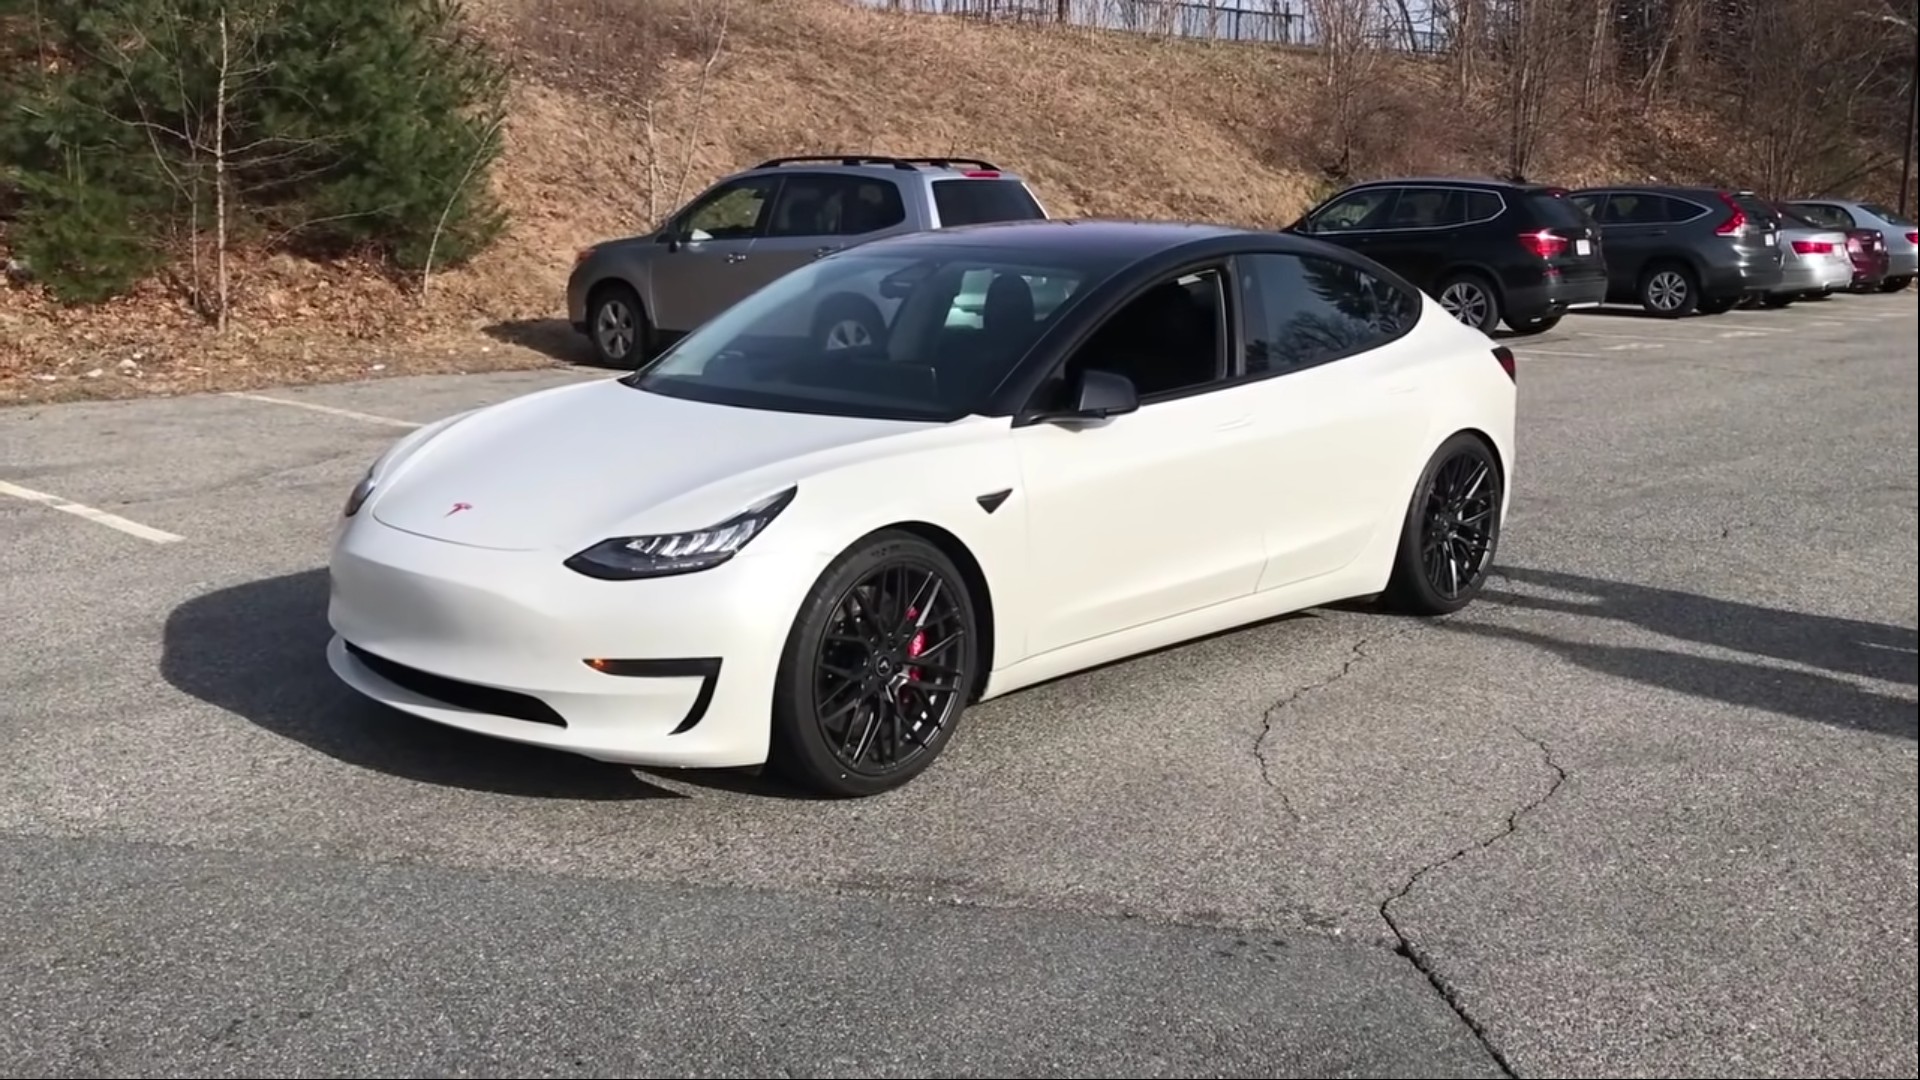 Pre-Owned Tesla Model 3 Dominates Secondary Market - TeslaCarHQ.com